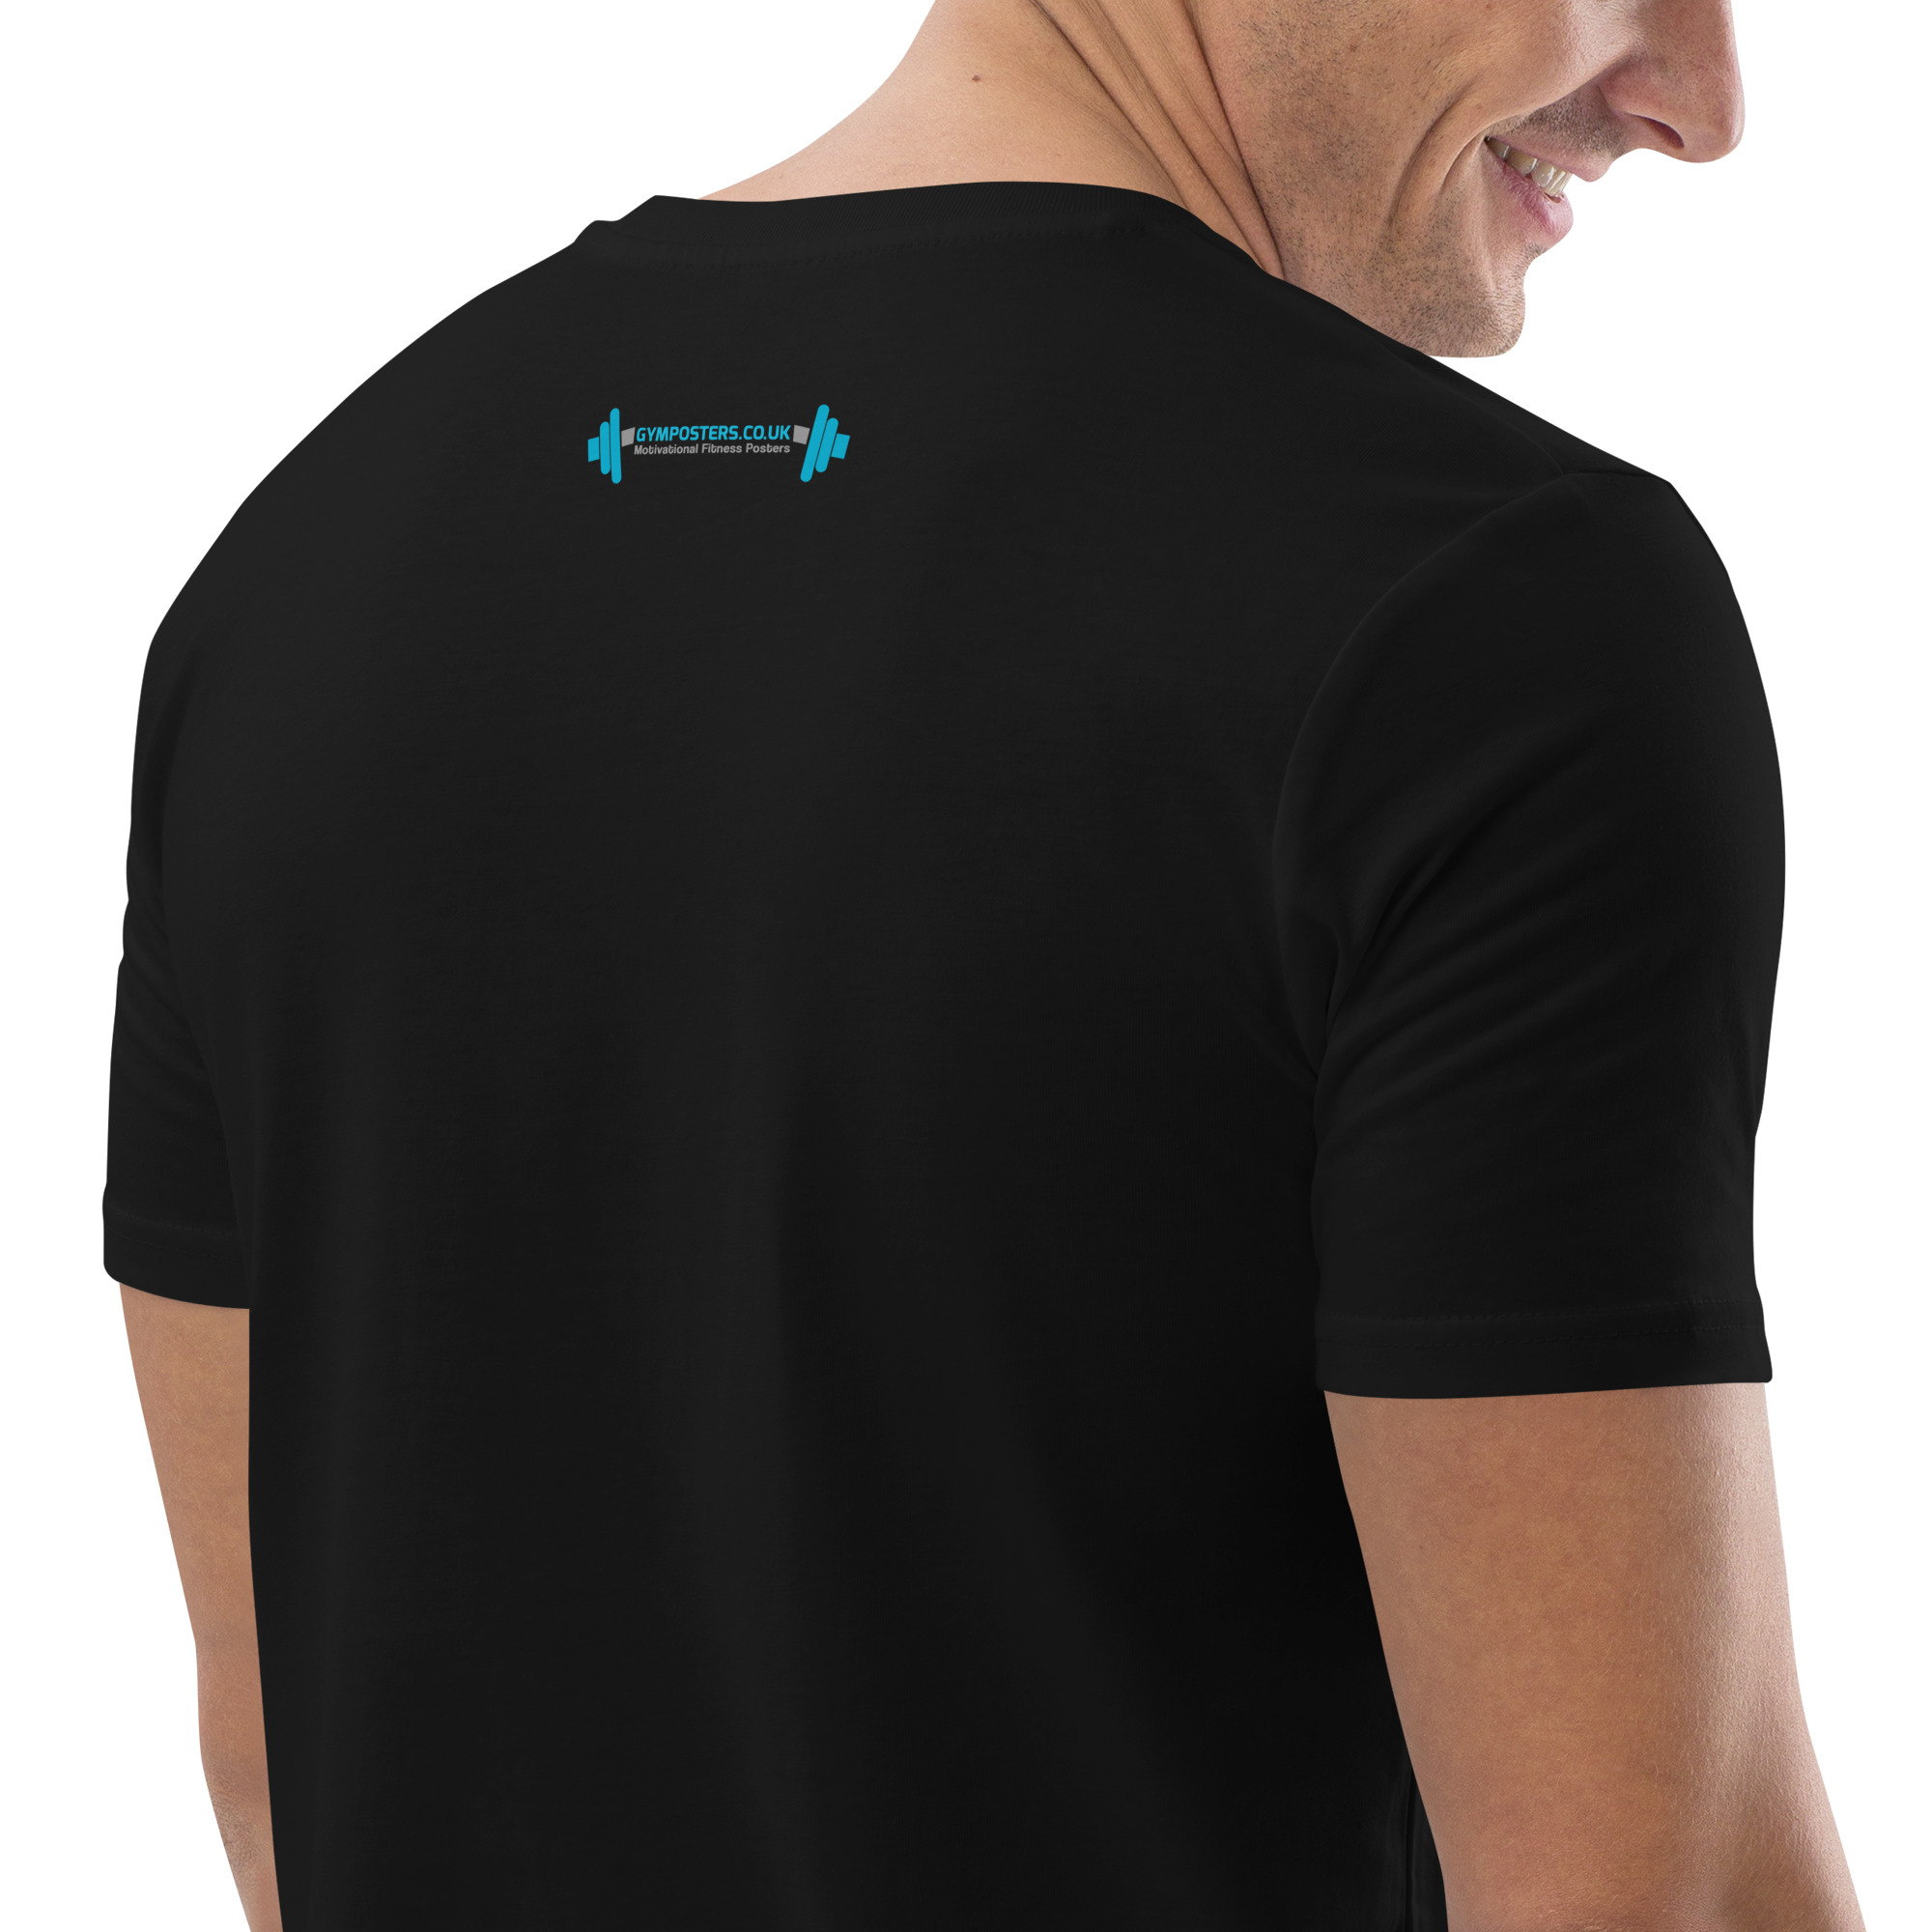 unisex-organic-cotton-t-shirt-black-zoomed-in-3-6578689f2aa39.jpg